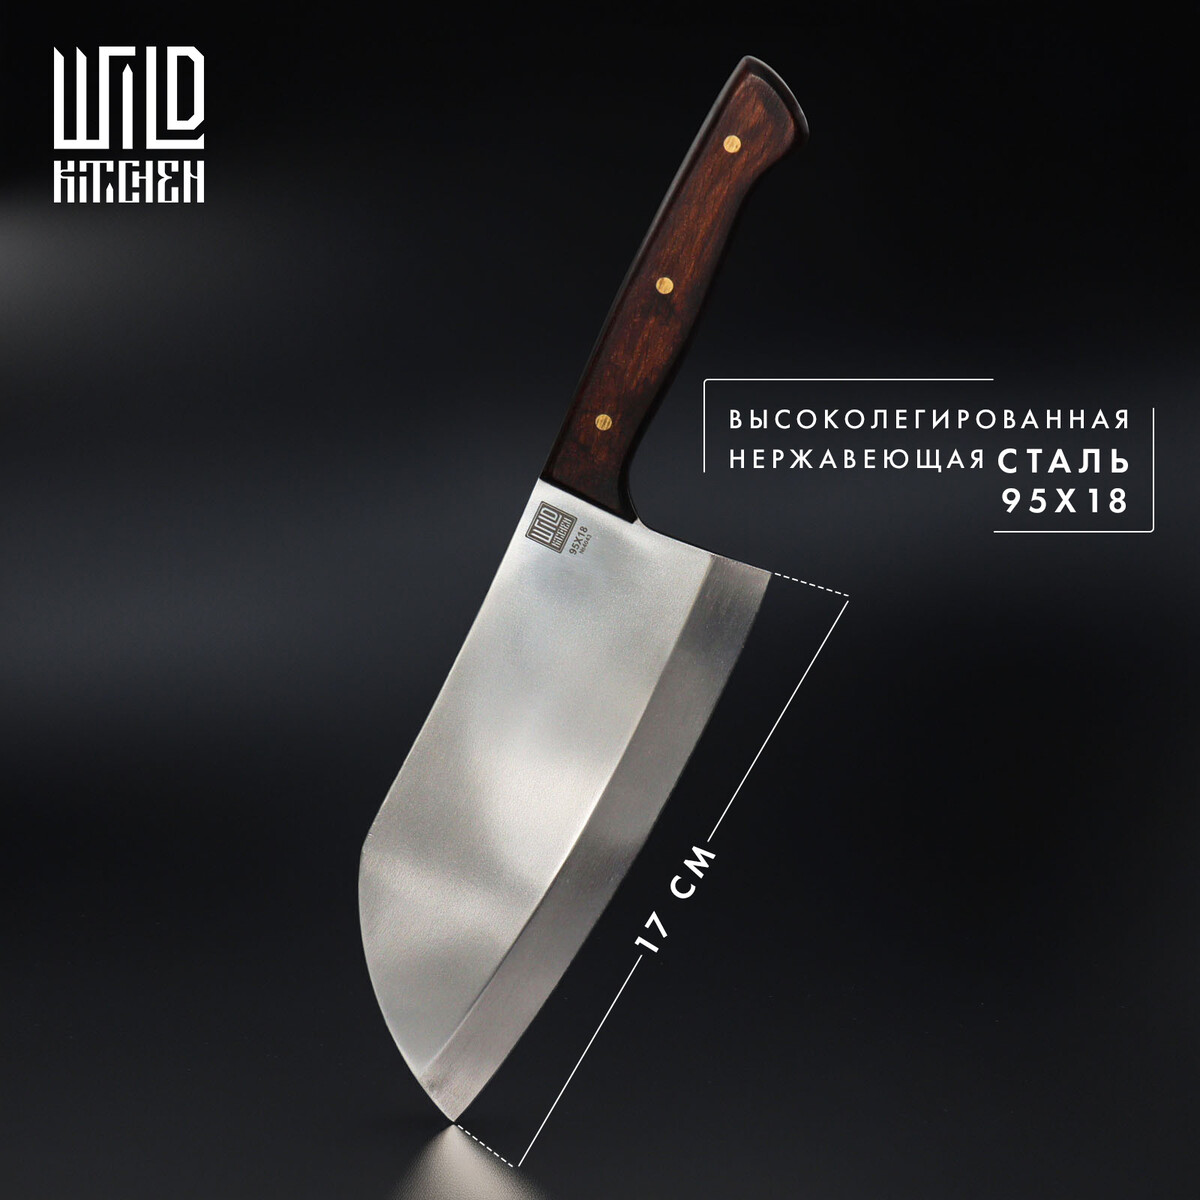 Нож - топорик средний wild kitchen, сталь 95×18, лезвие 17 см нож кухонный филейный wild kitchen сталь 95×18 лезвие 17 см